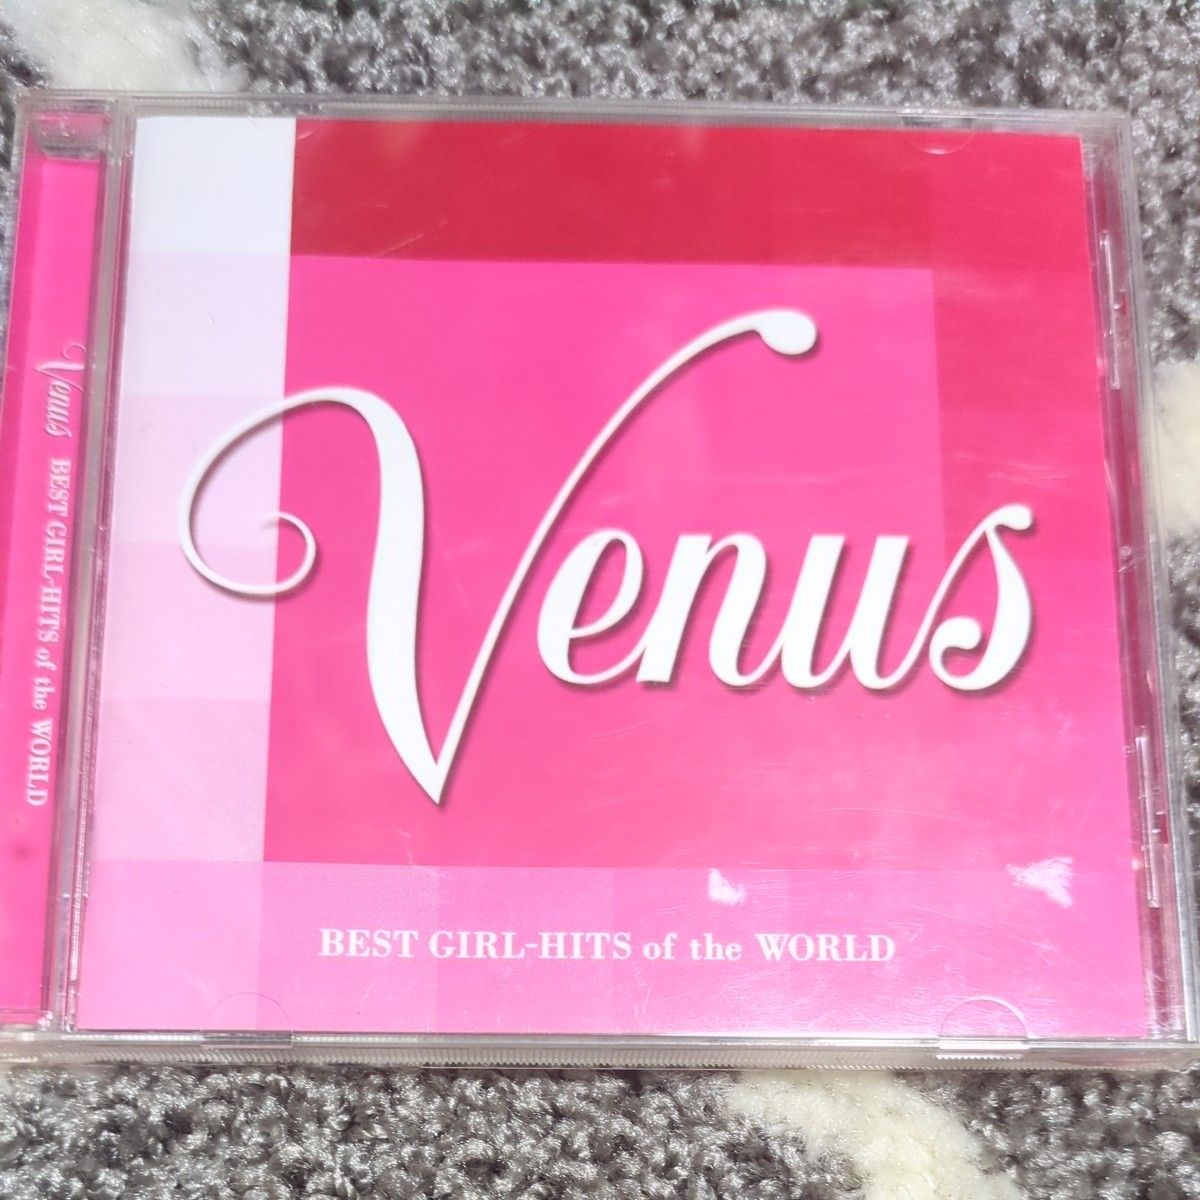 Venus 2 -Best Girl-hits Of The World